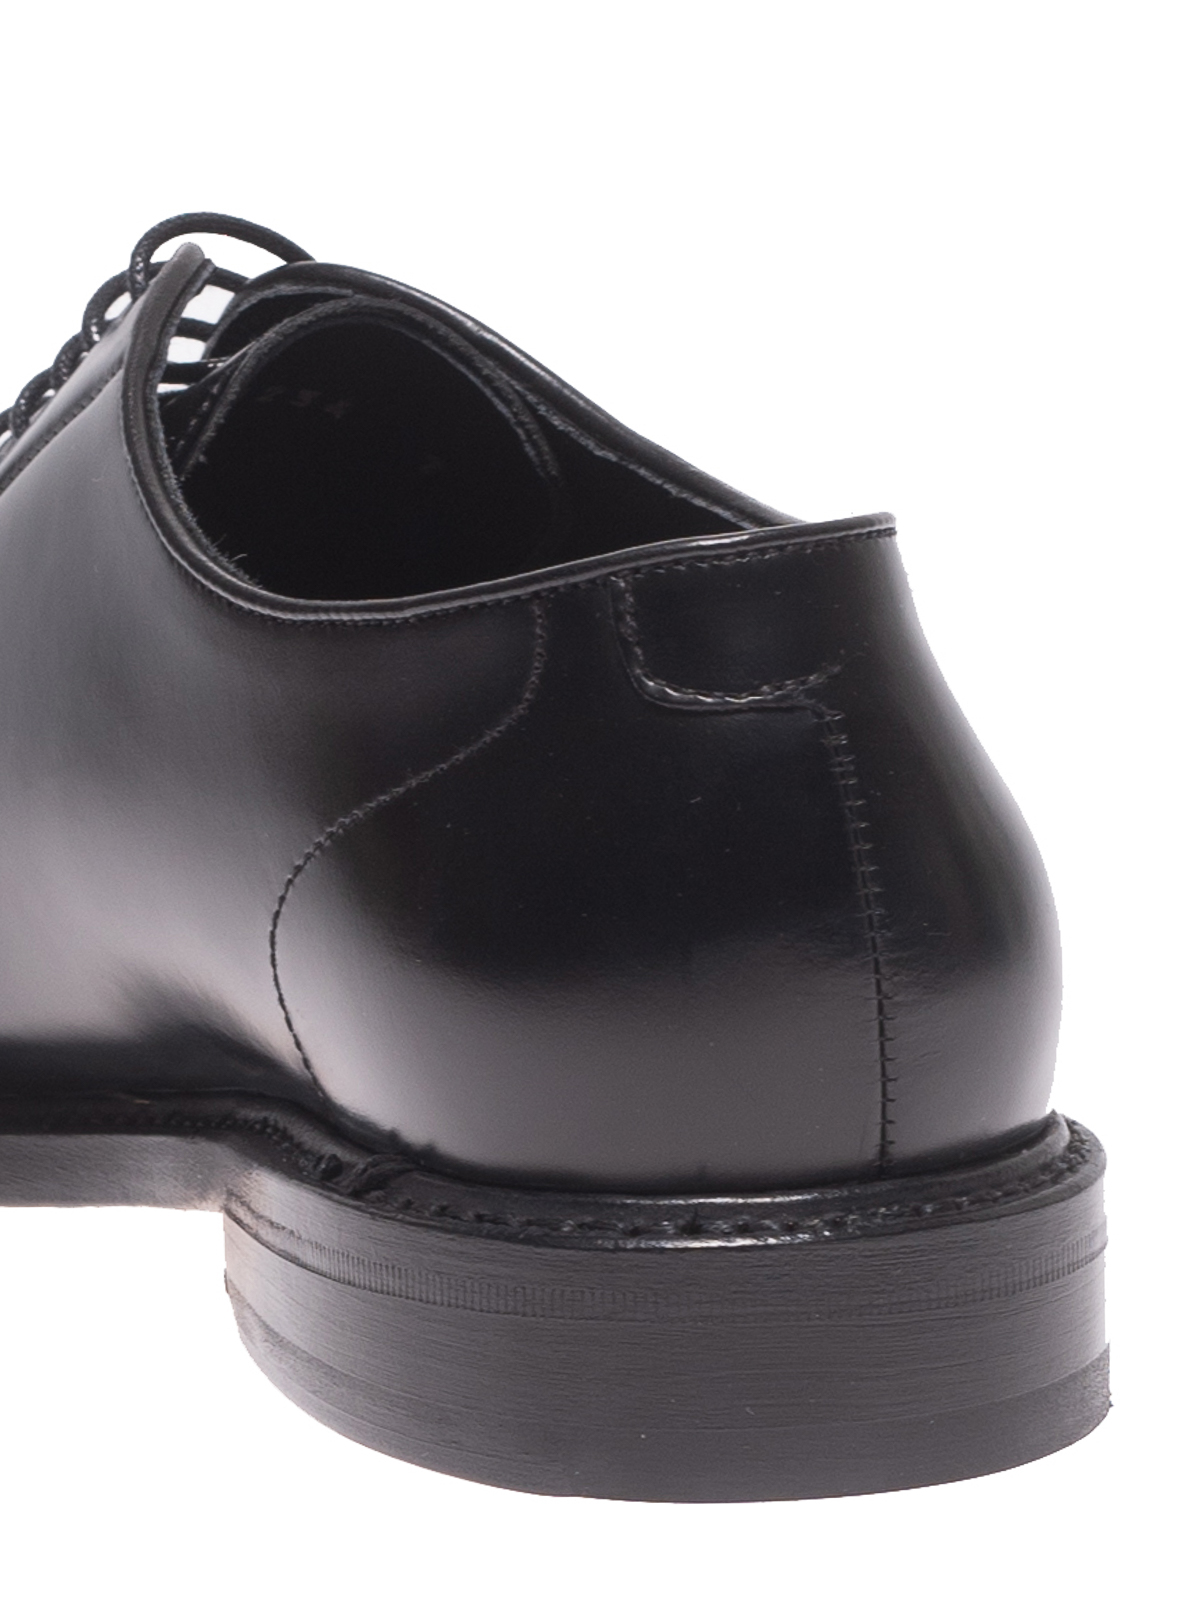 berwick shoes online